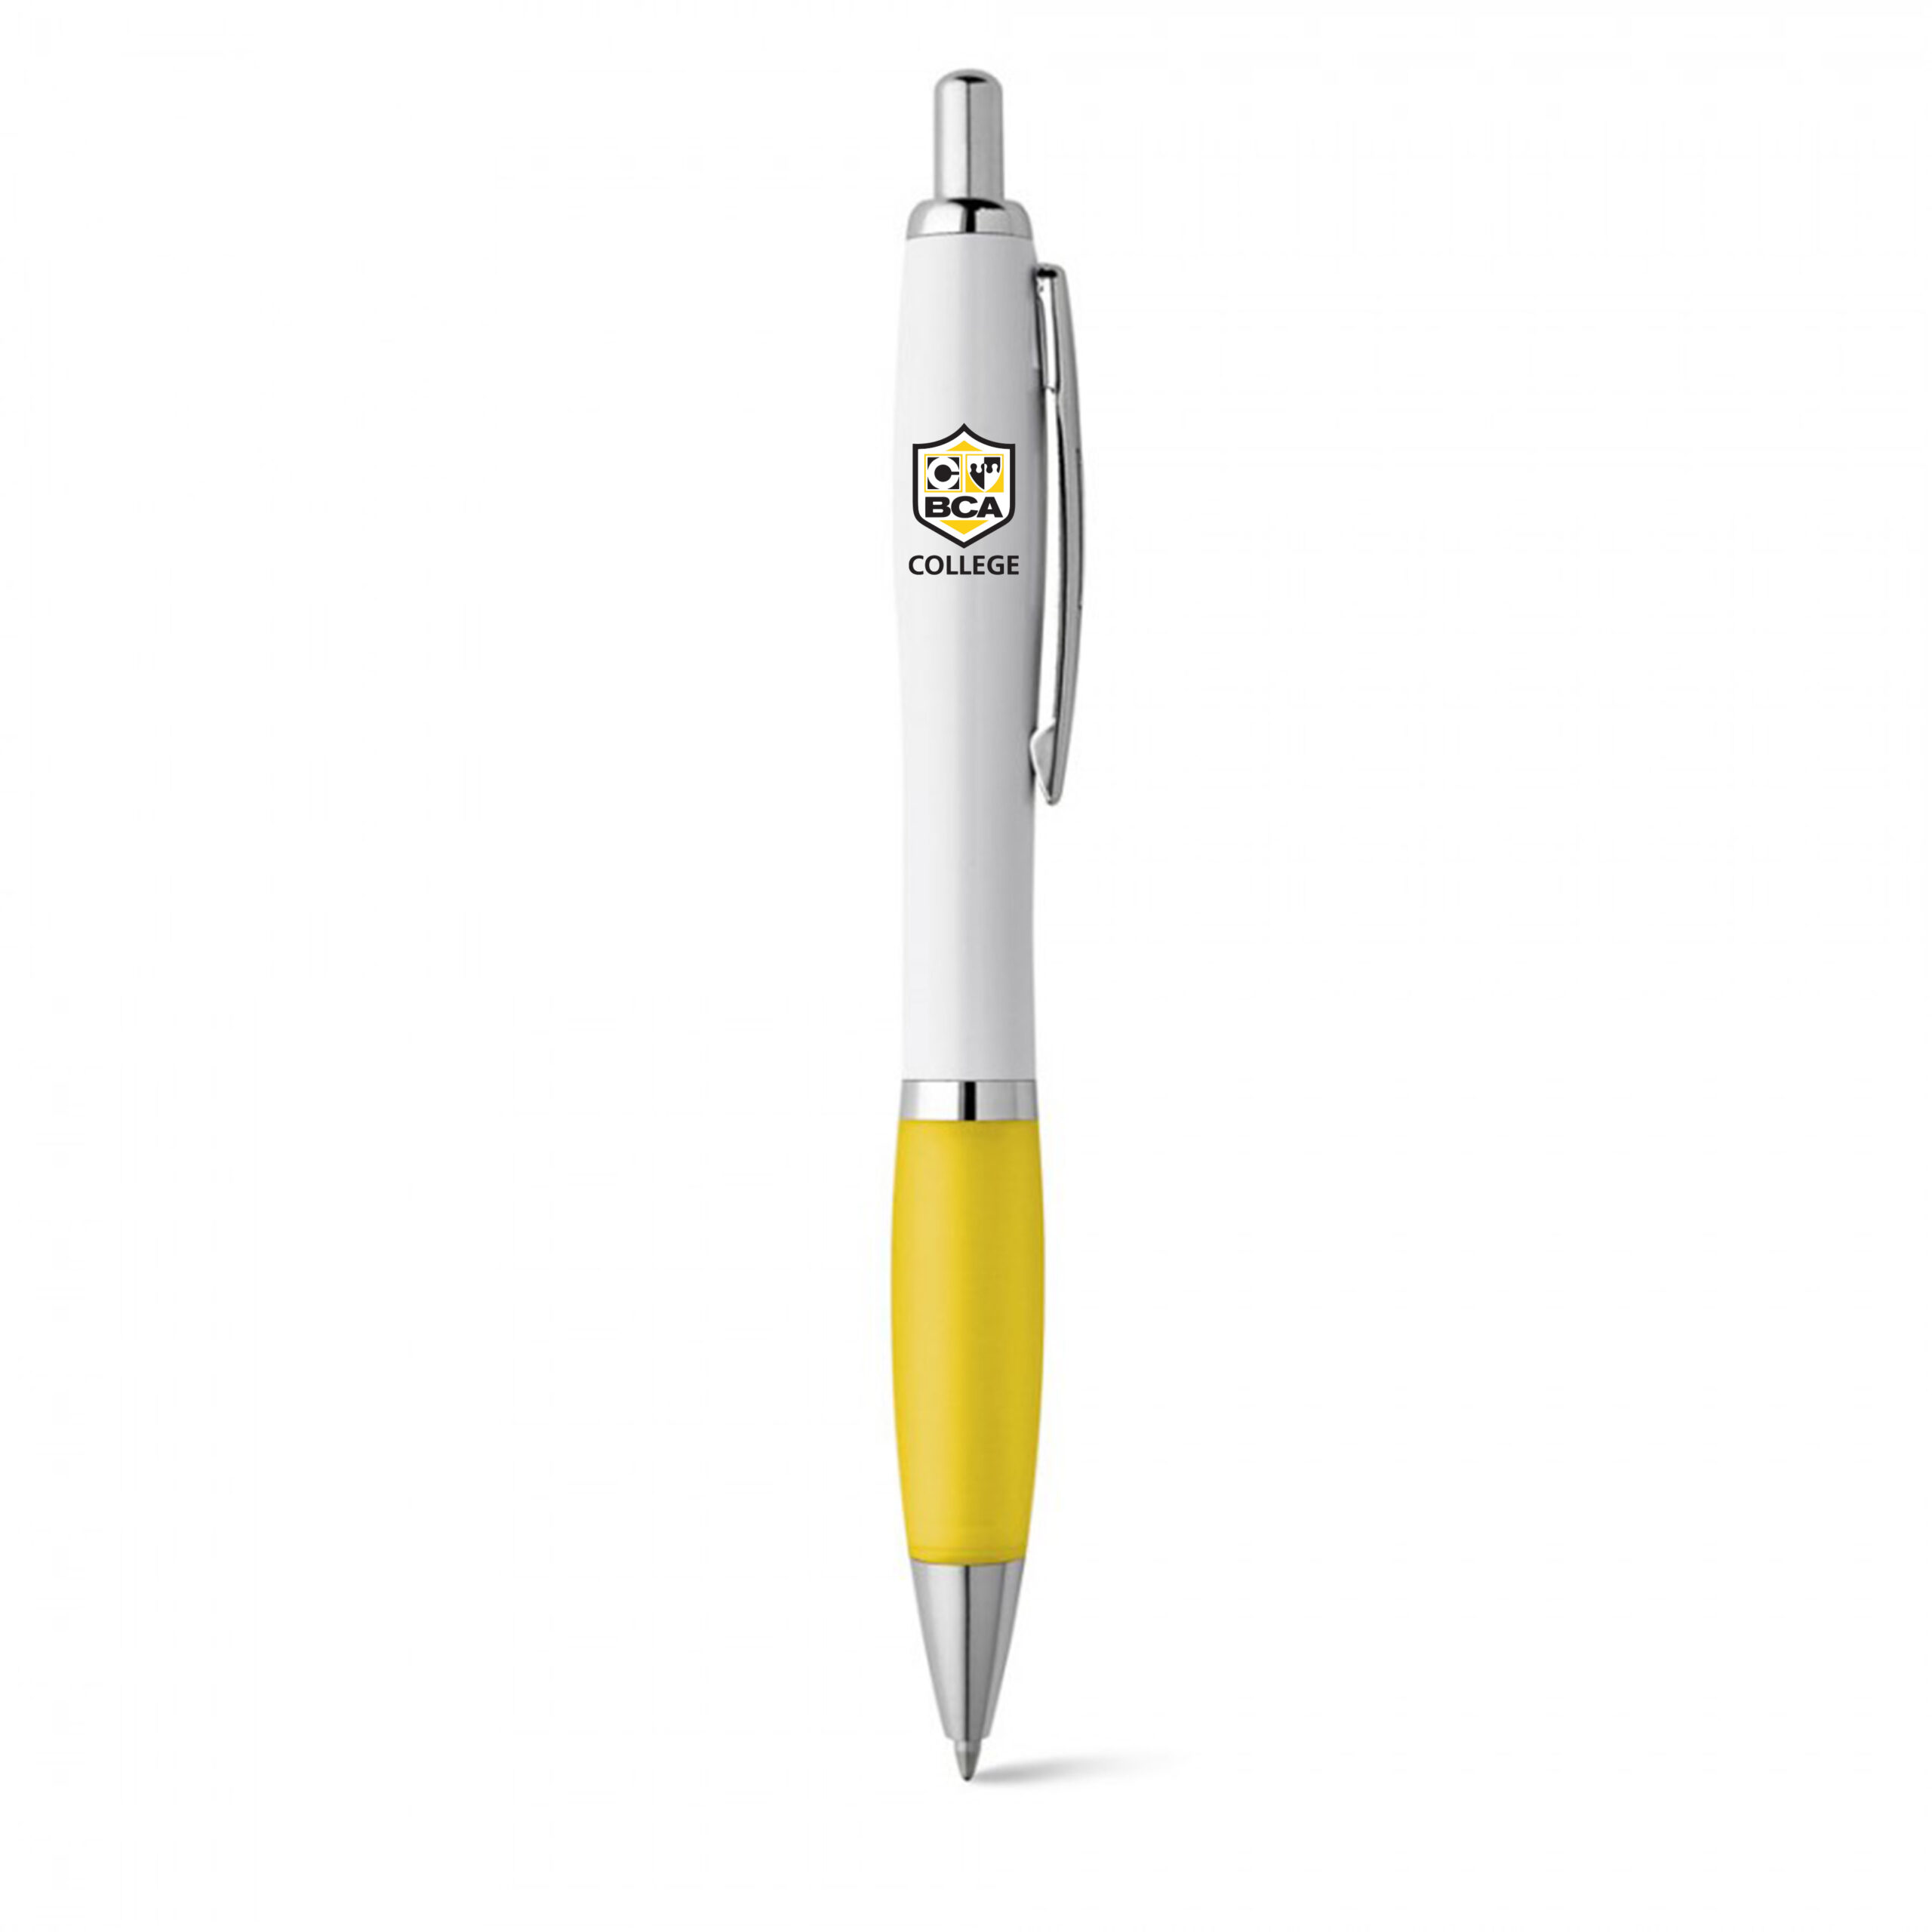 BCA Στυλό άσπρο – Κίτρινο πλαστικό με τύπωμα και κλιπ